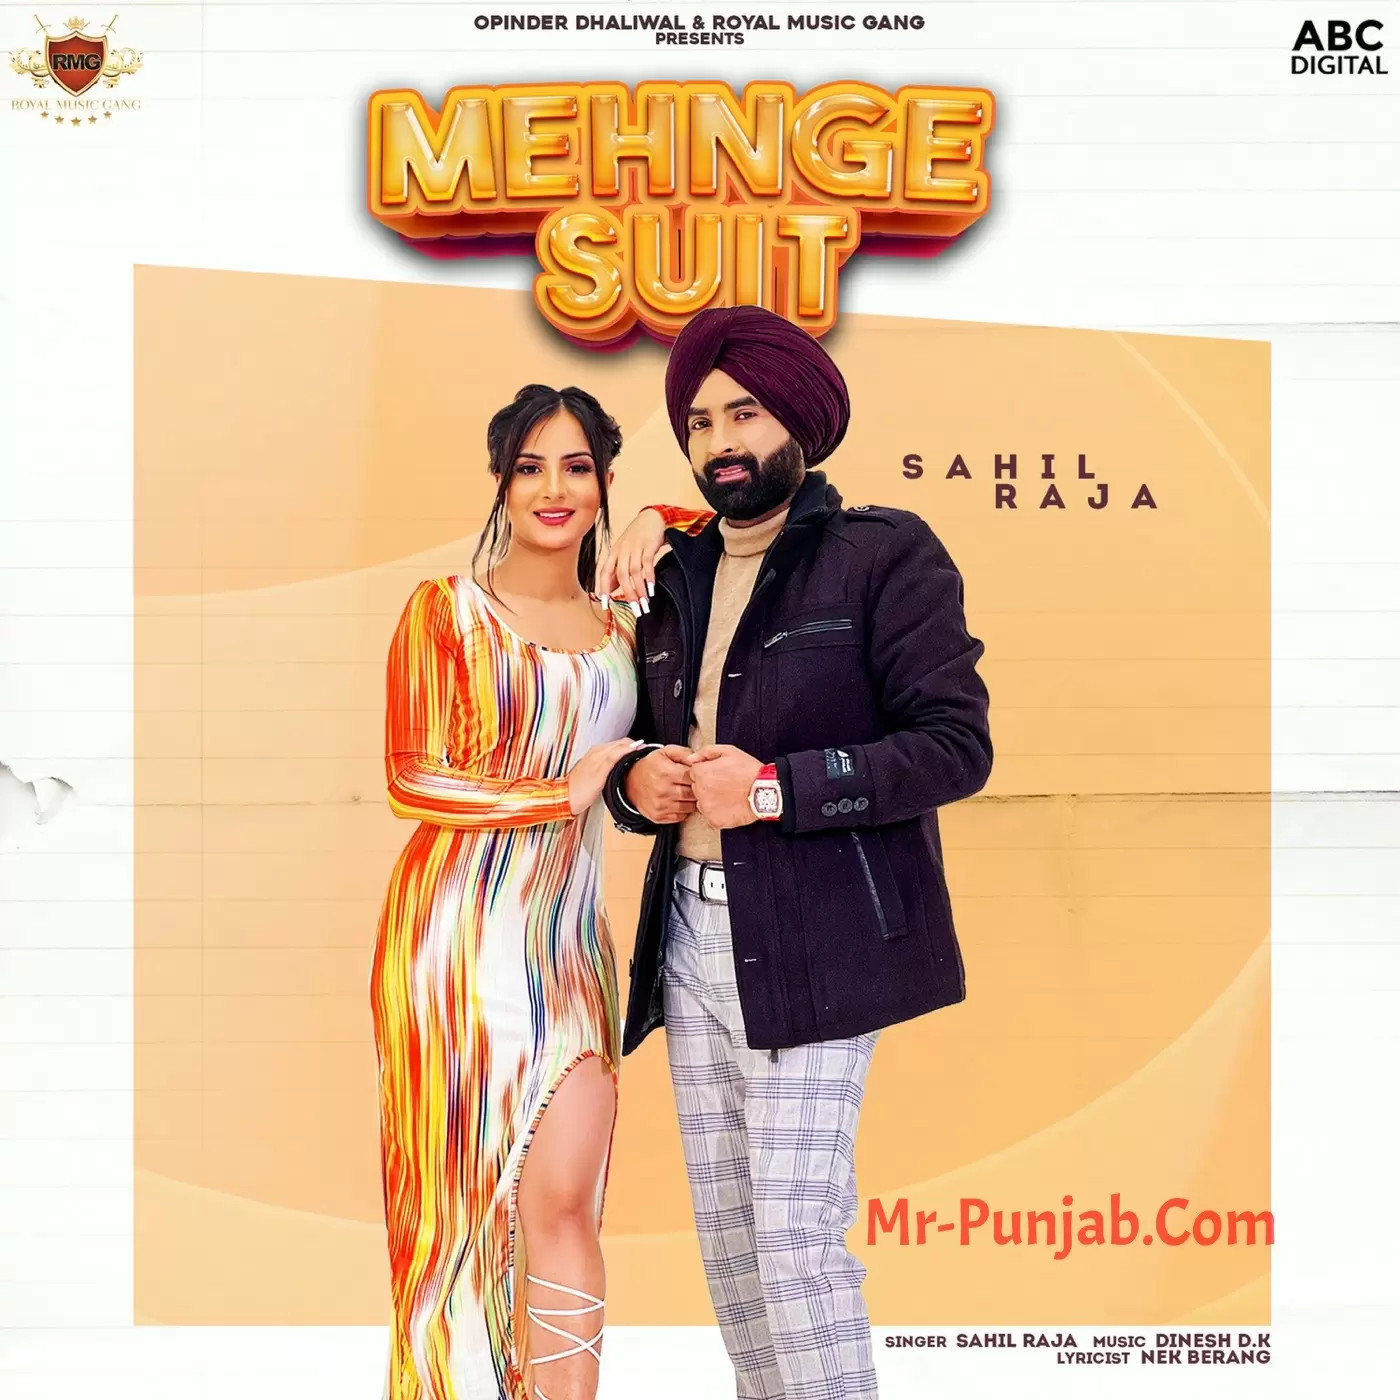 Mehnge Suit Sahil Raja Mp3 Download Song - Mr-Punjab